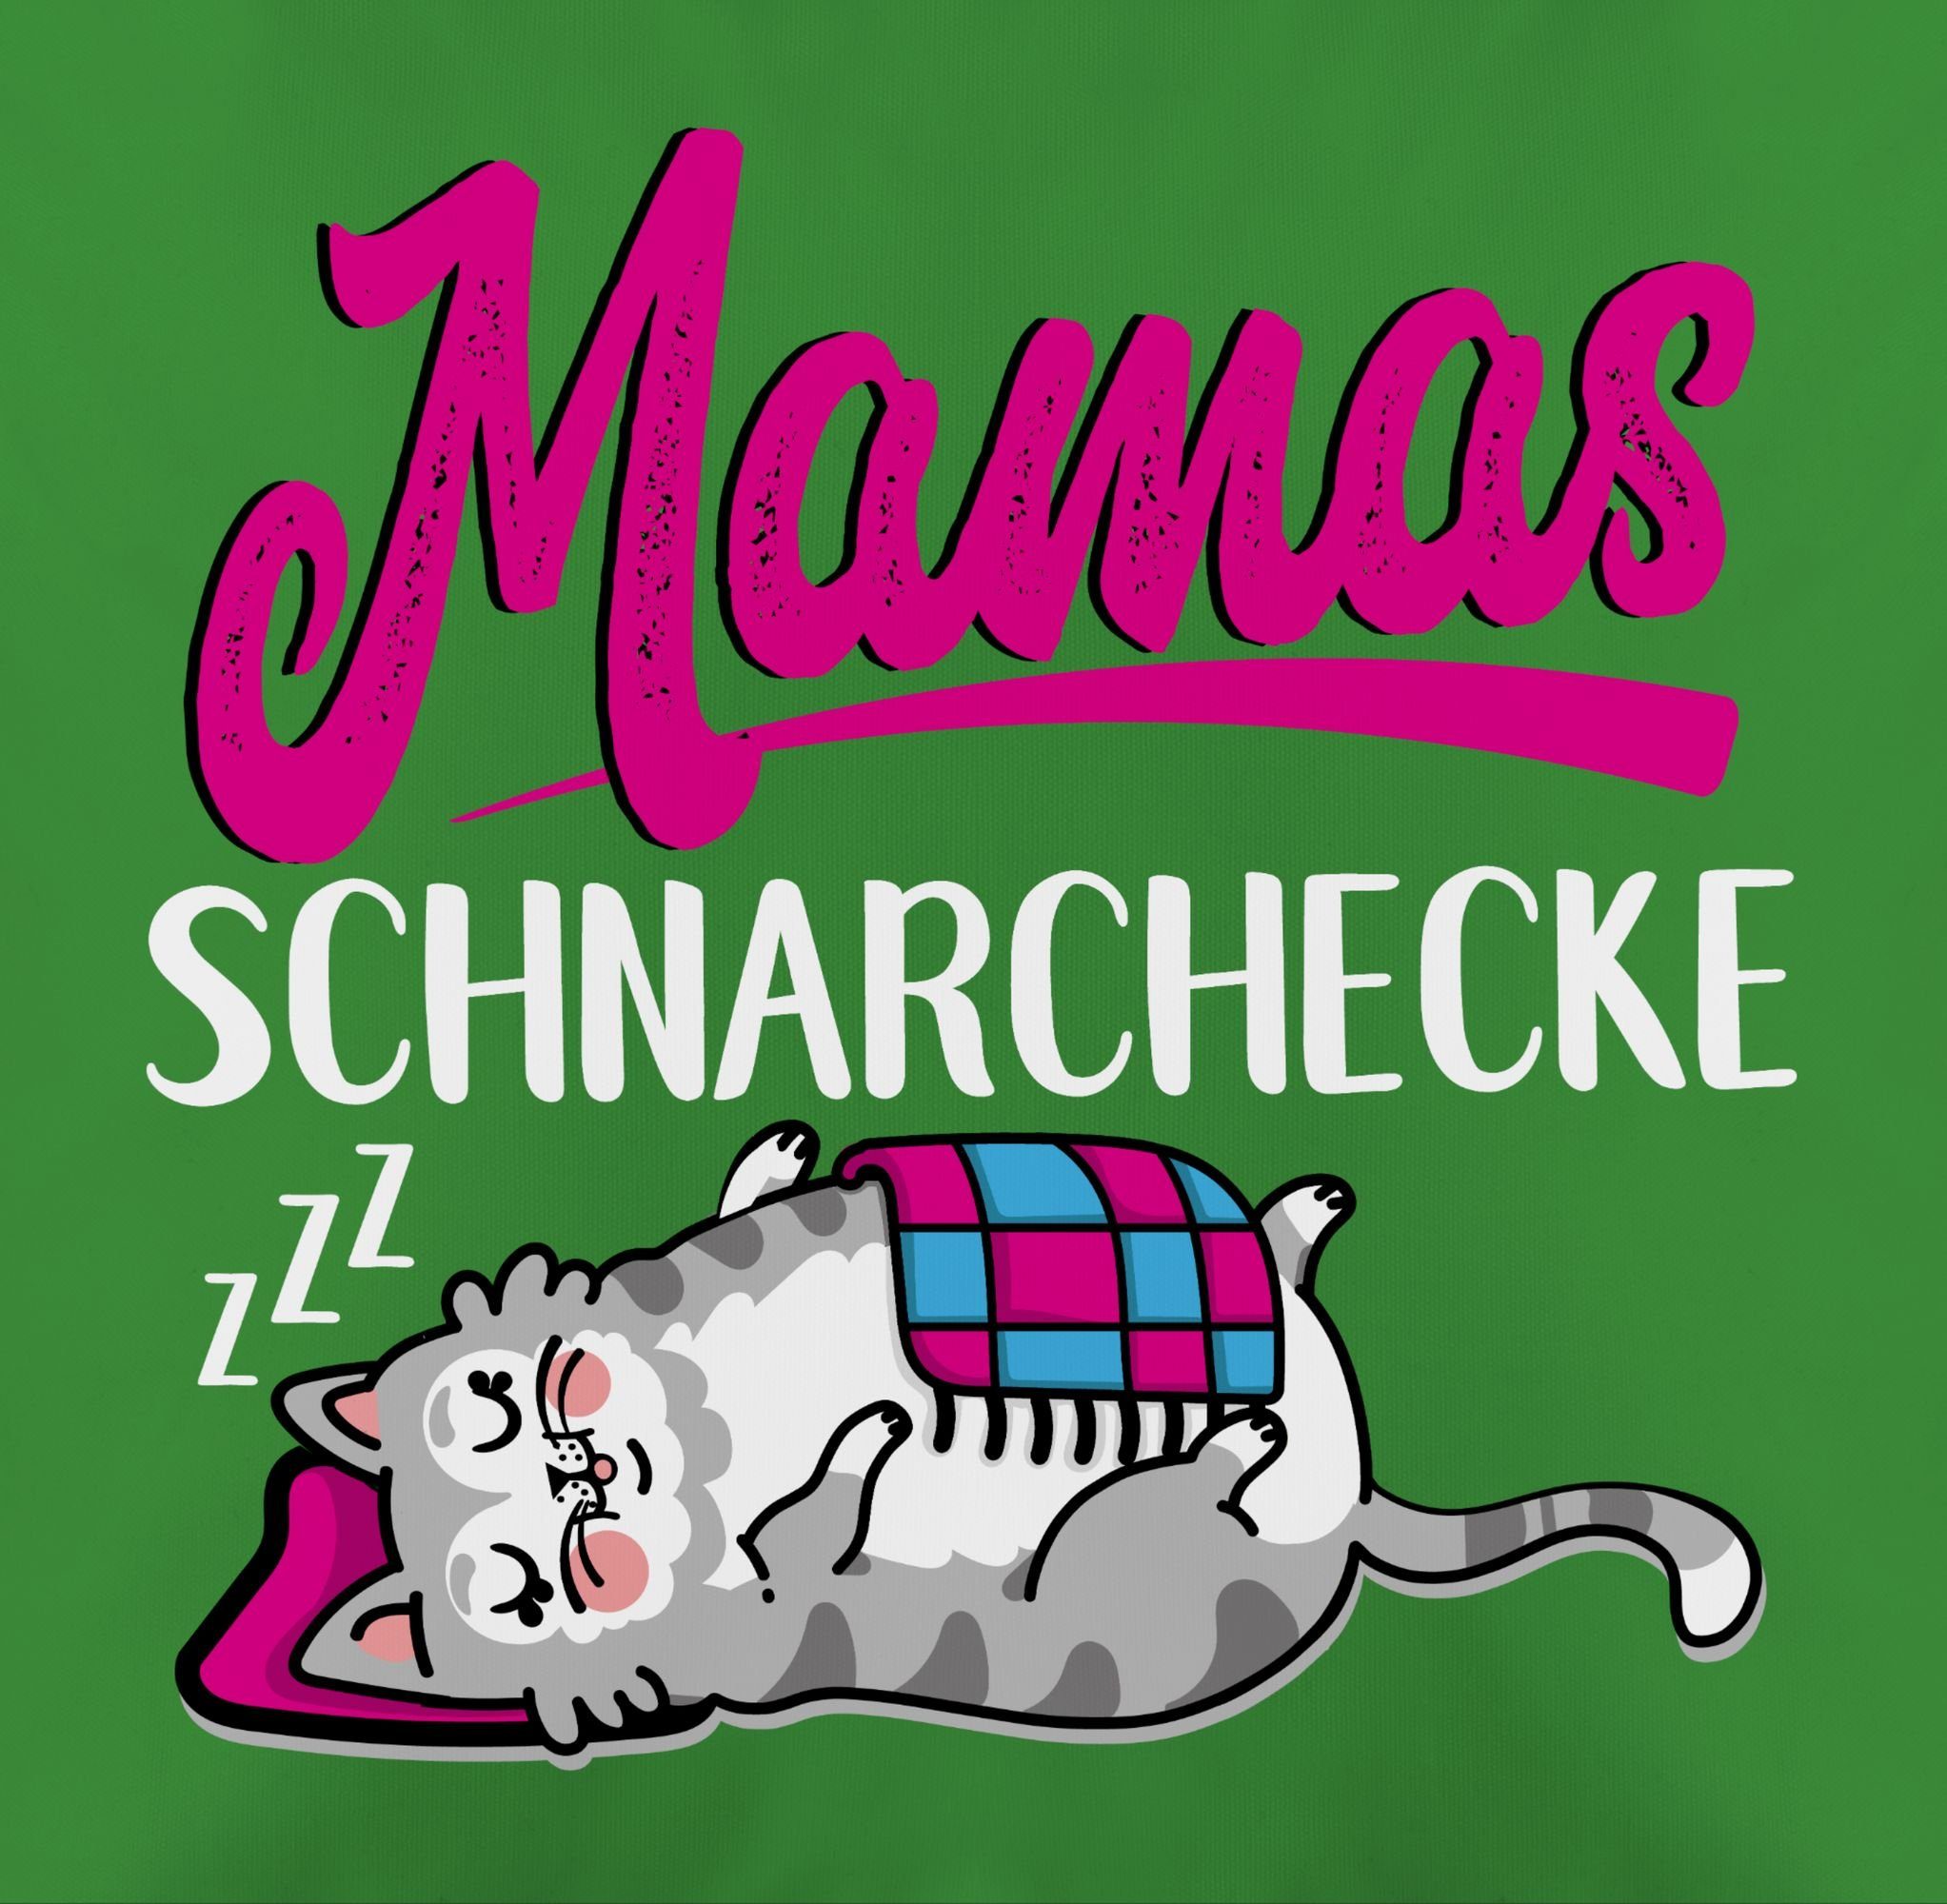 Shirtracer Dekokissen Mamas Schnarchecke - Muttertagsgeschenk Katze Grün 3 weiß/fuchsia